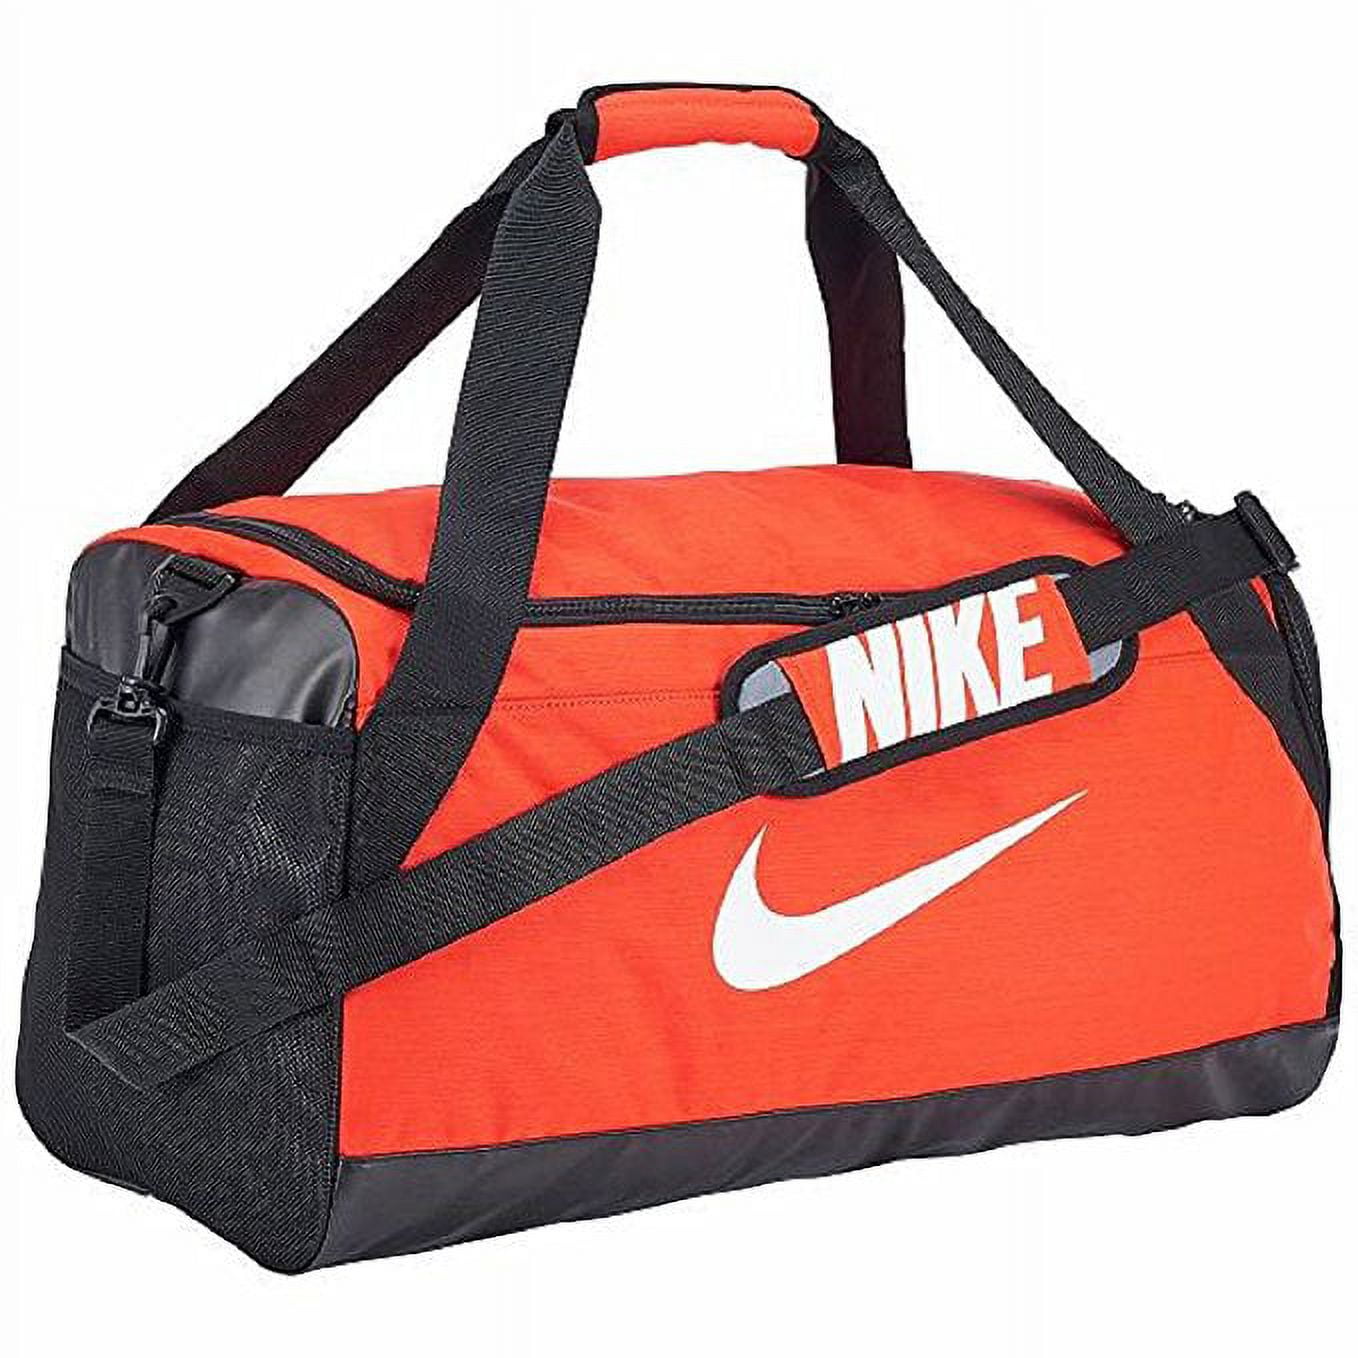 Nike Brasilia 6 Duffel Bag Orange/Black/White -